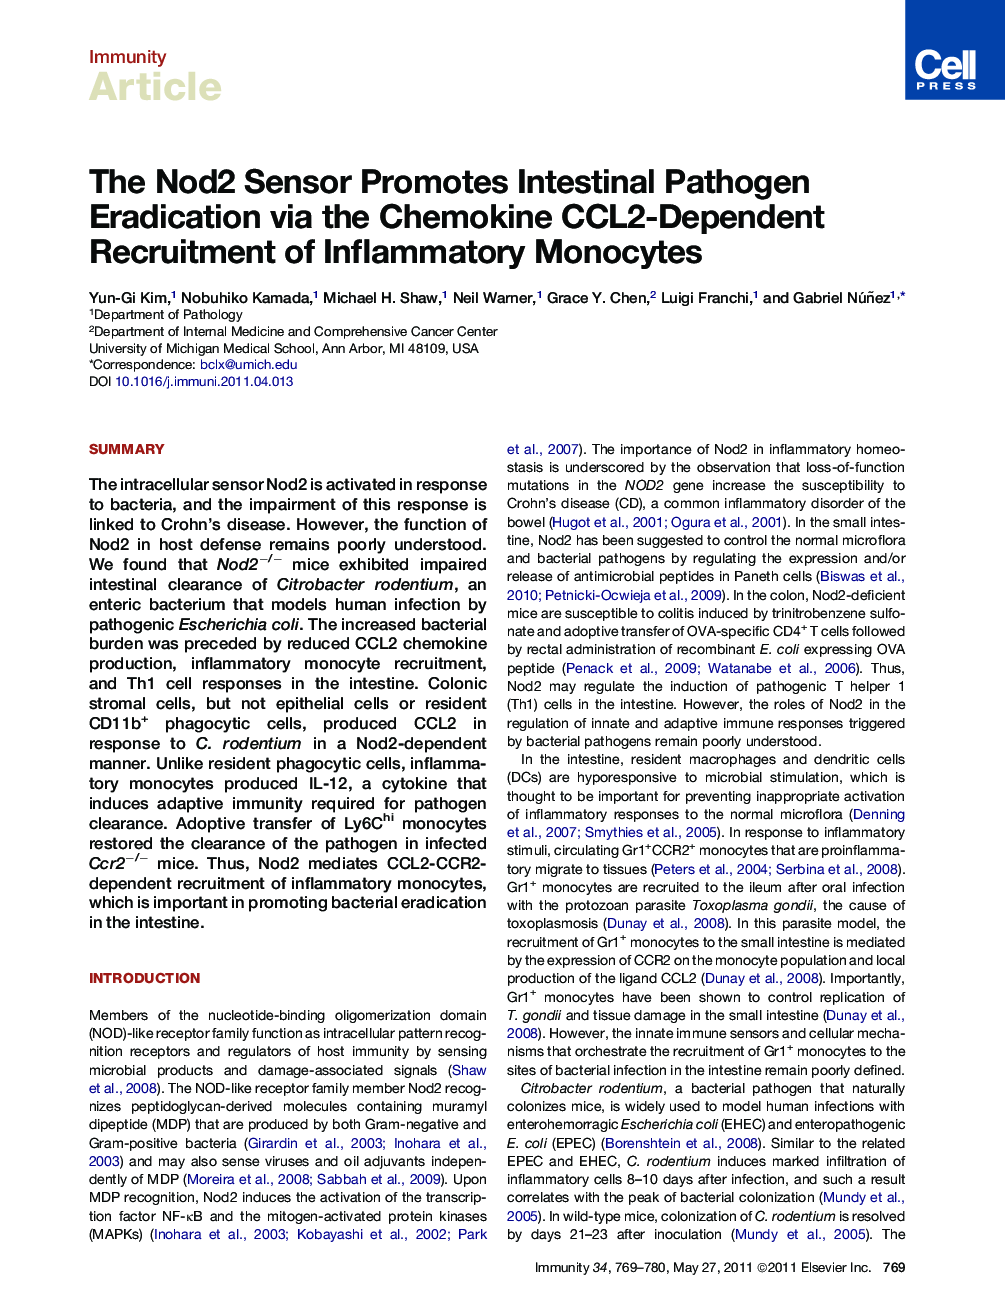 The Nod2 Sensor Promotes Intestinal Pathogen Eradication via the Chemokine CCL2-Dependent Recruitment of Inflammatory Monocytes